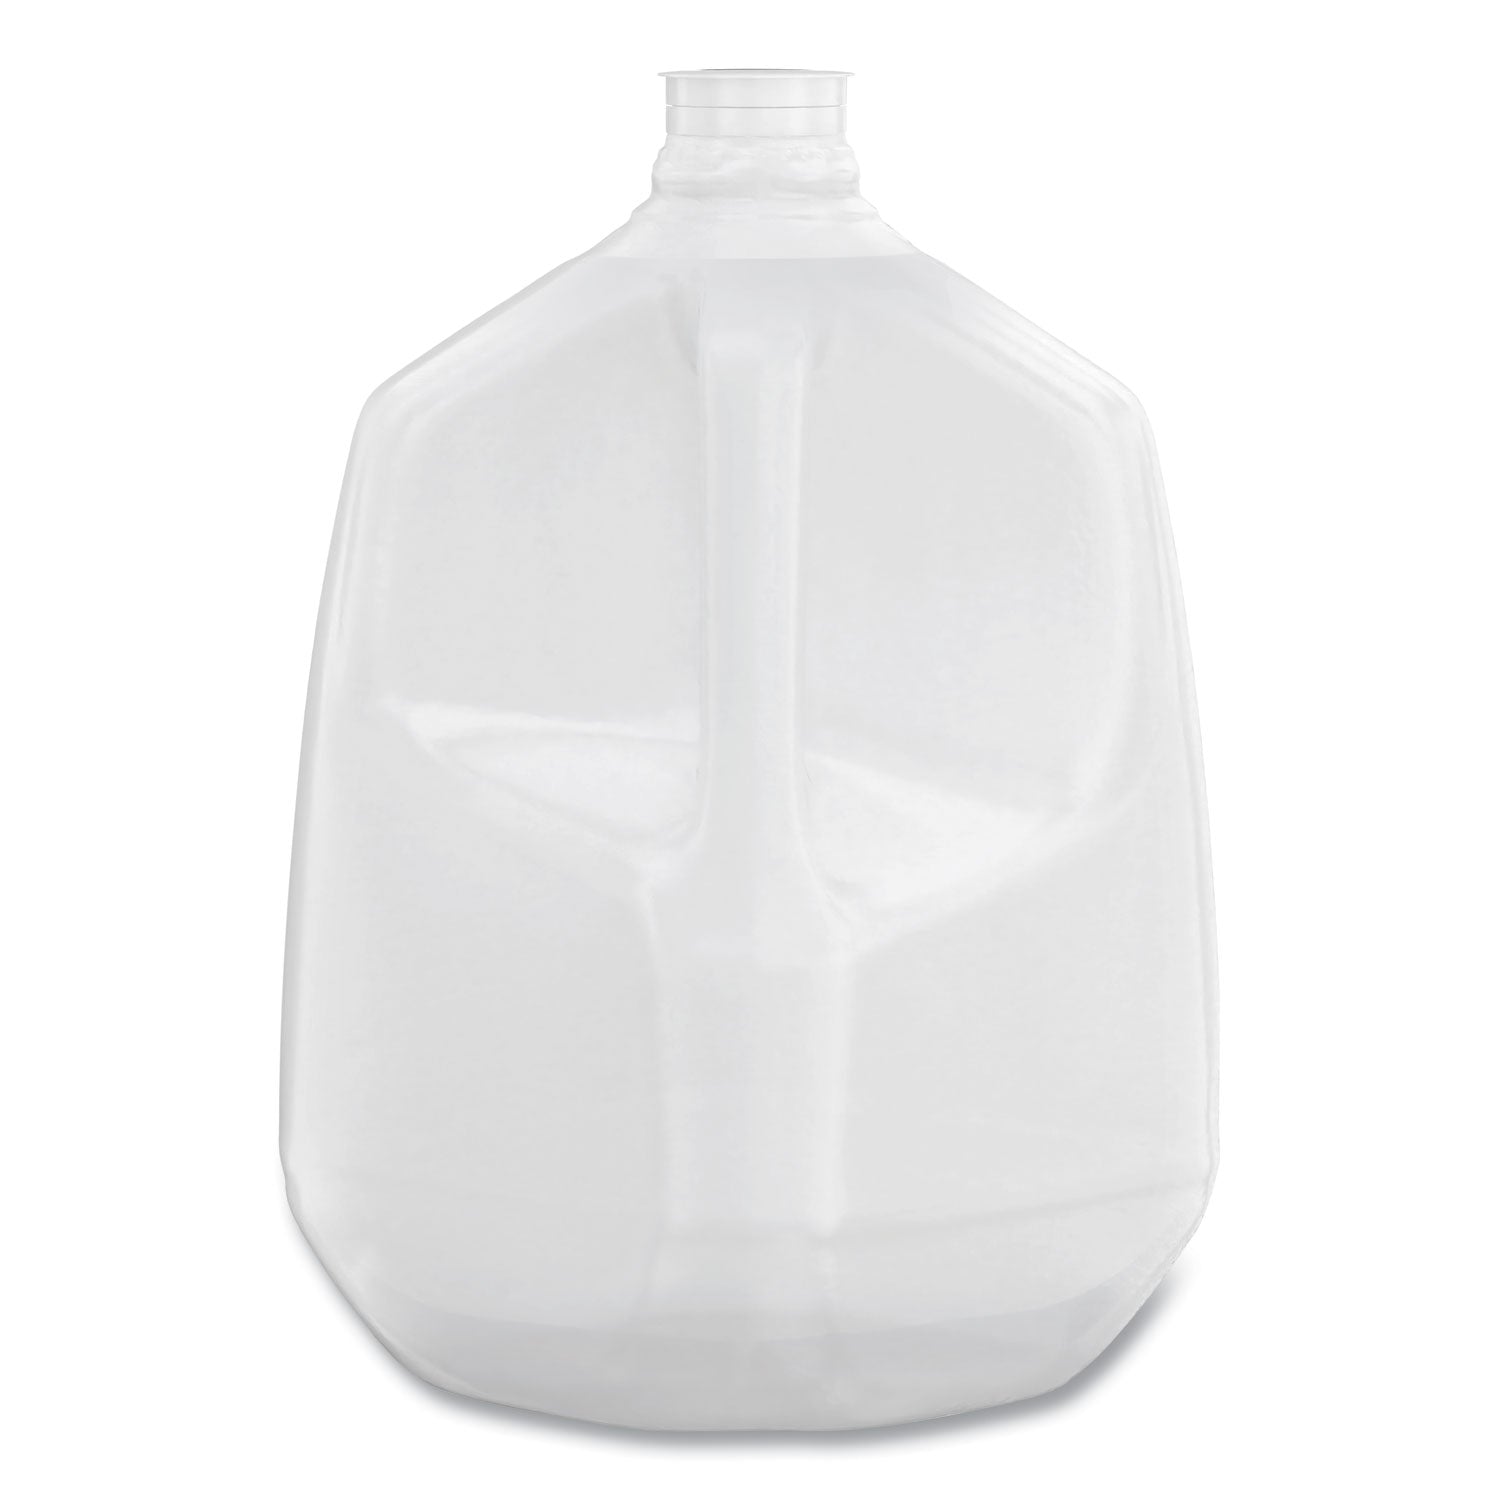 distilled-water-1-gal-bottle-6-bottles-carton-35-cartons-pallet_nle12532472 - 2